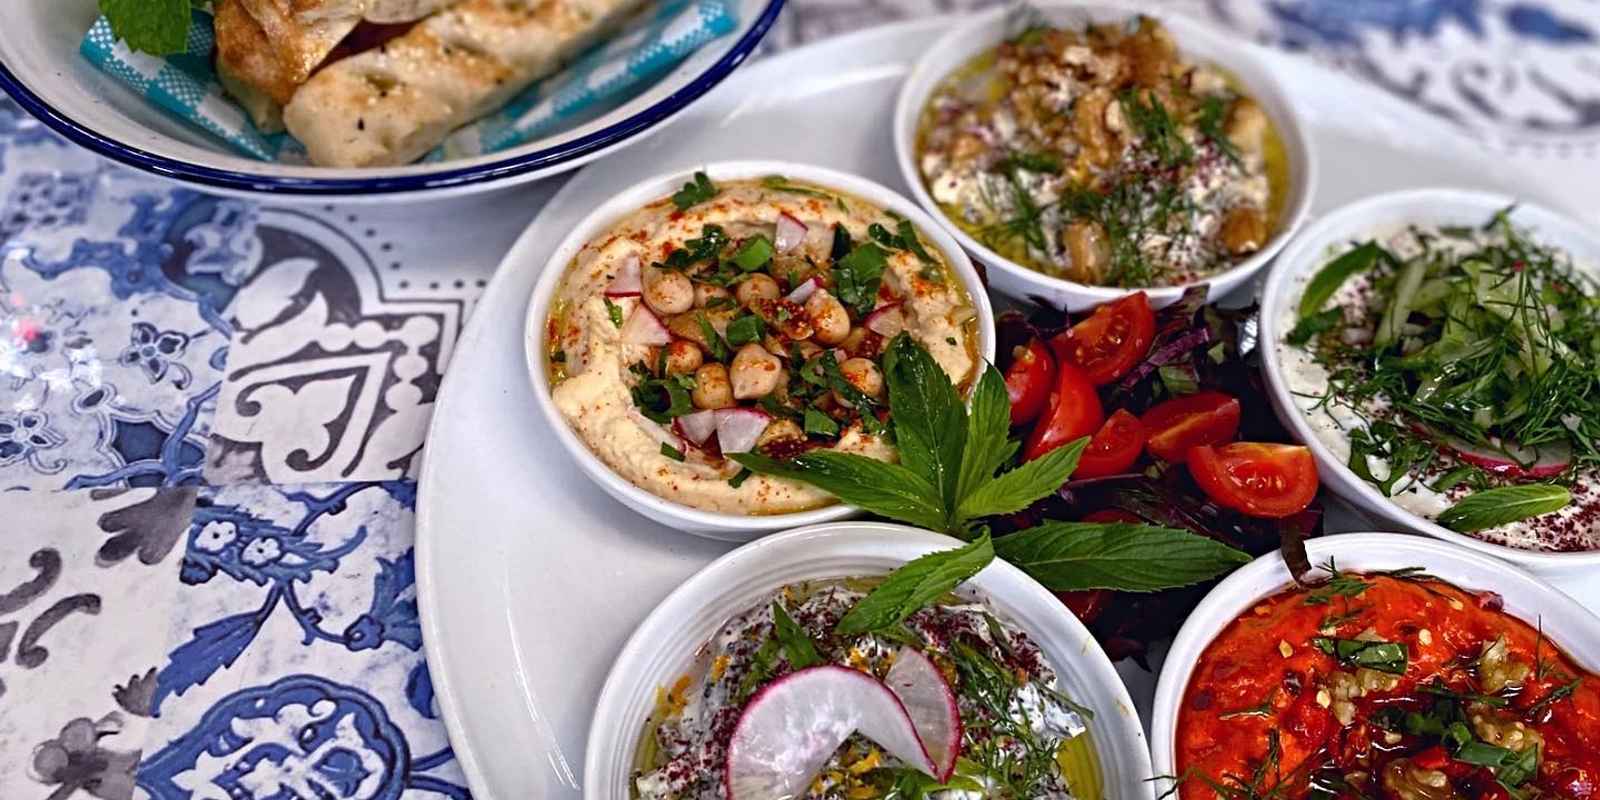 Konak Turkish Kitchen